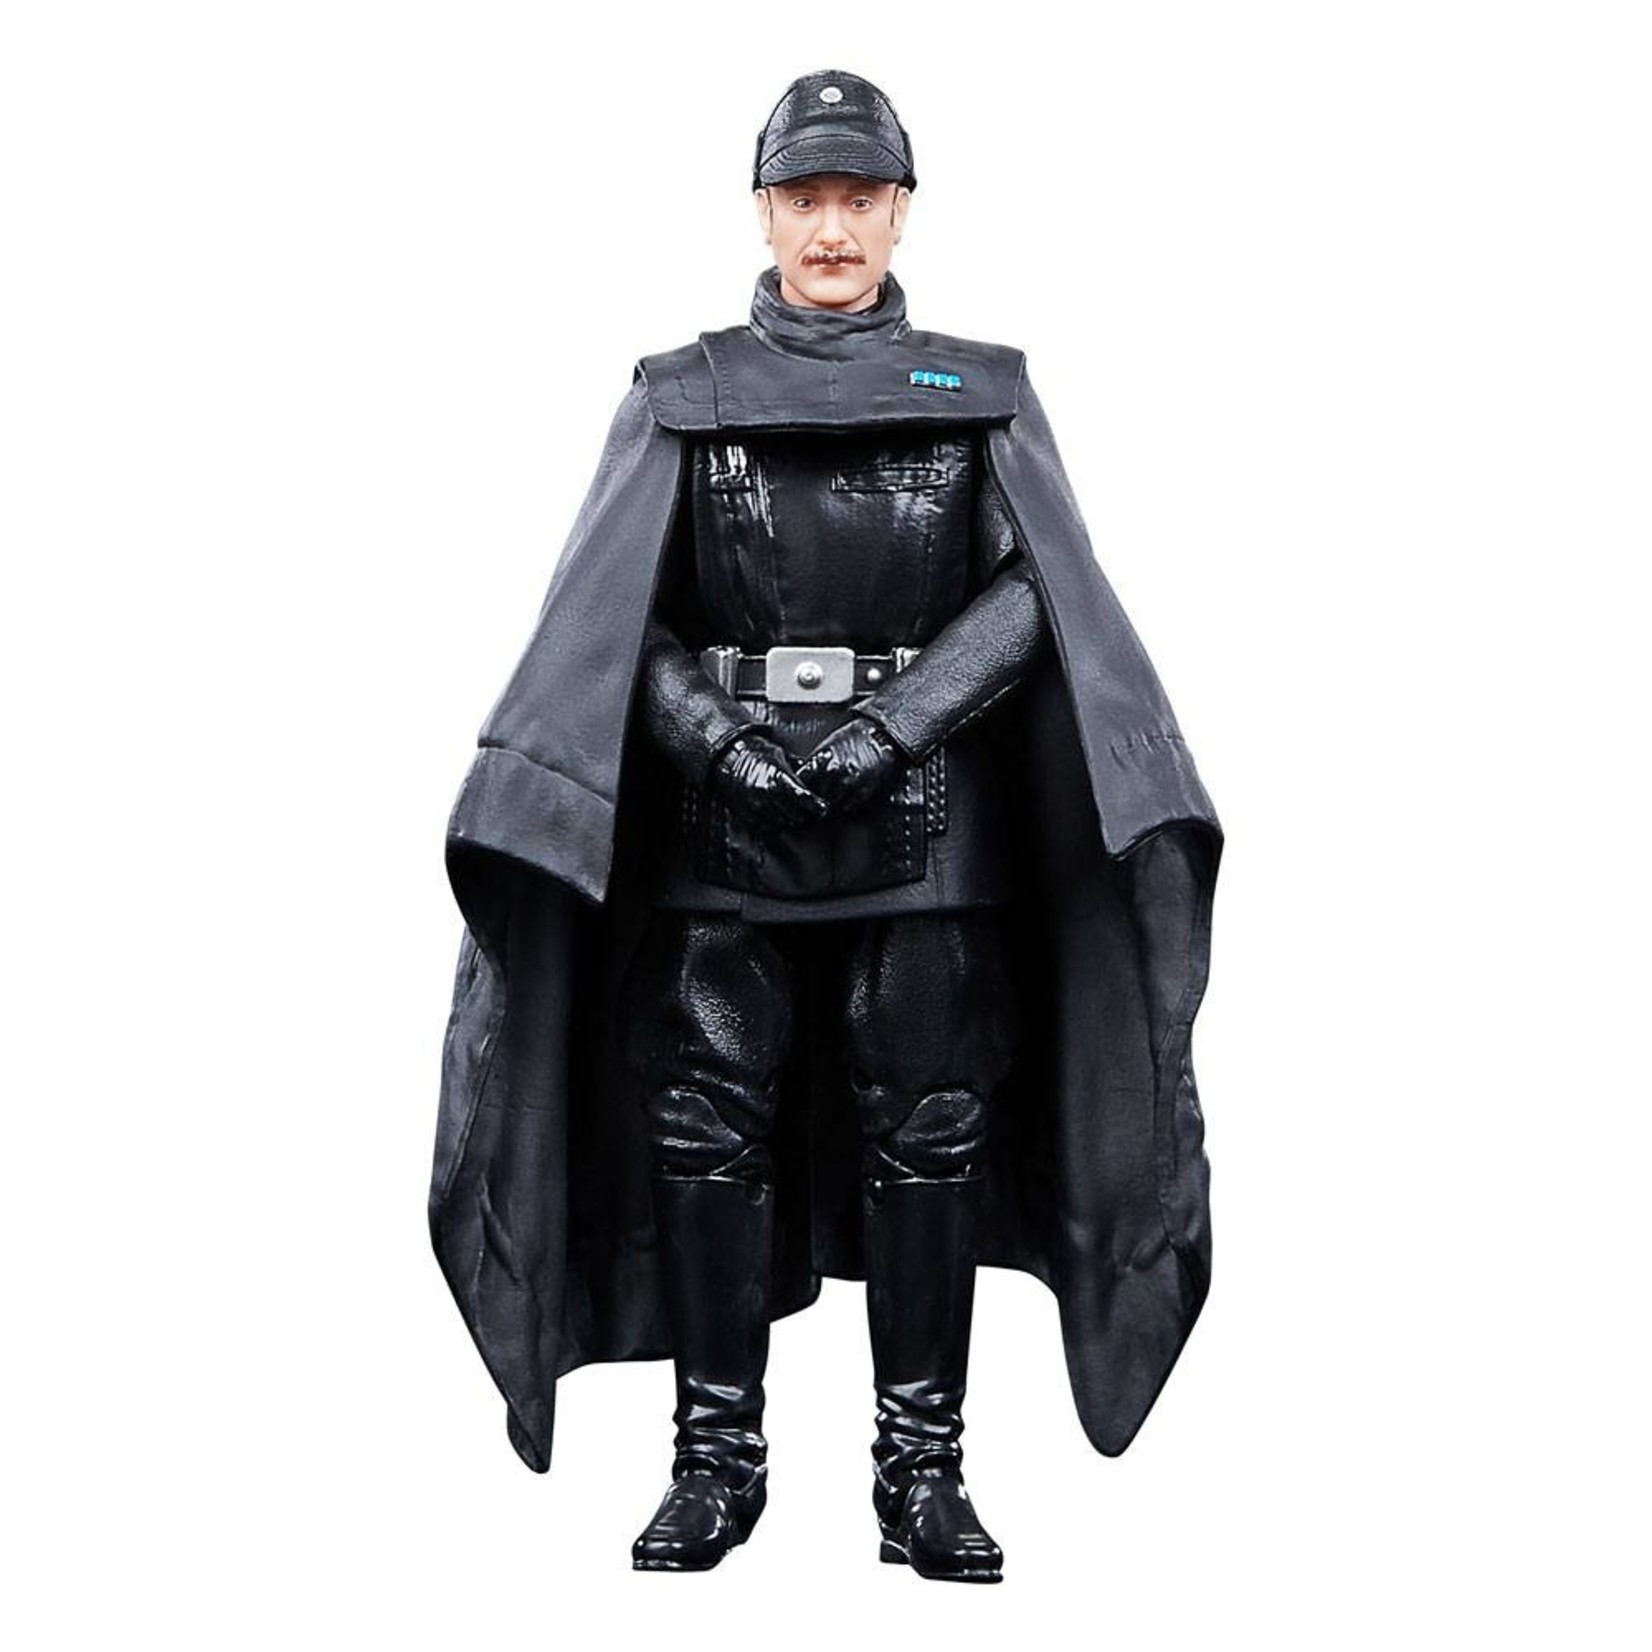 Hasbro Hasbro Star Wars The Black Series Andor Imperial Officer (Dark Times)